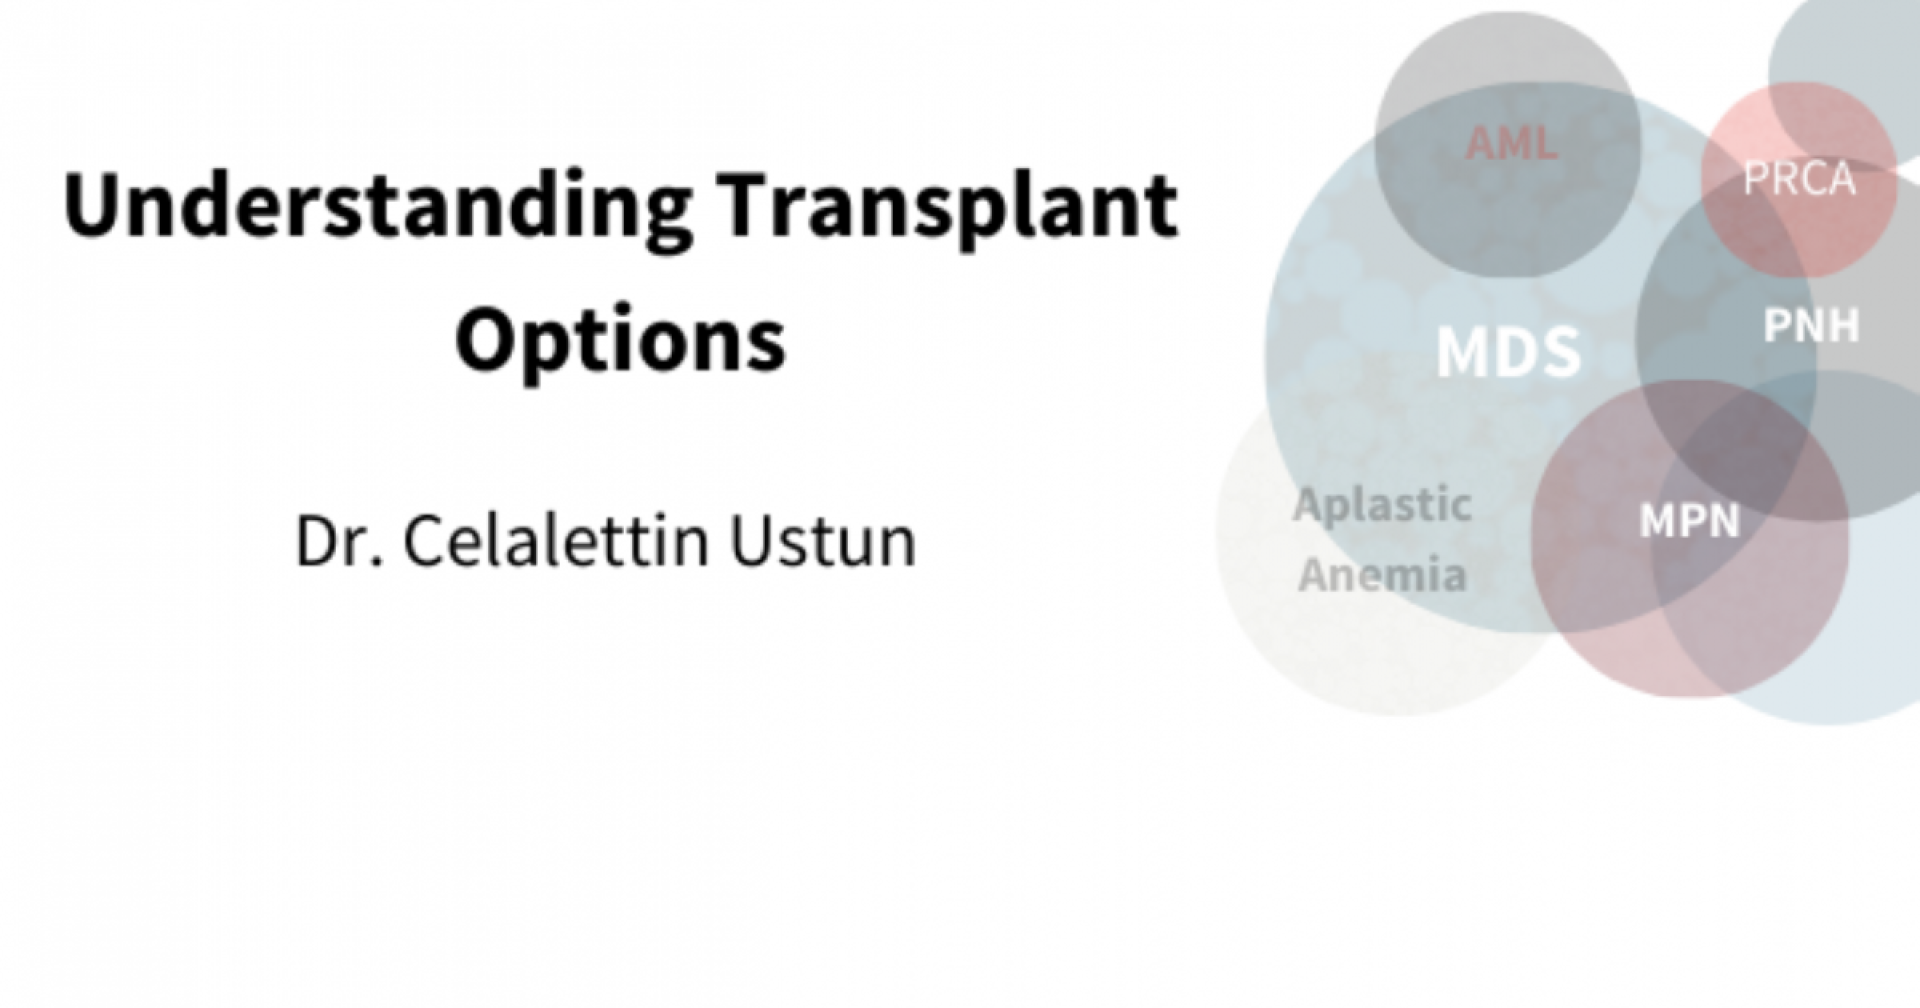 Understanding transplant options